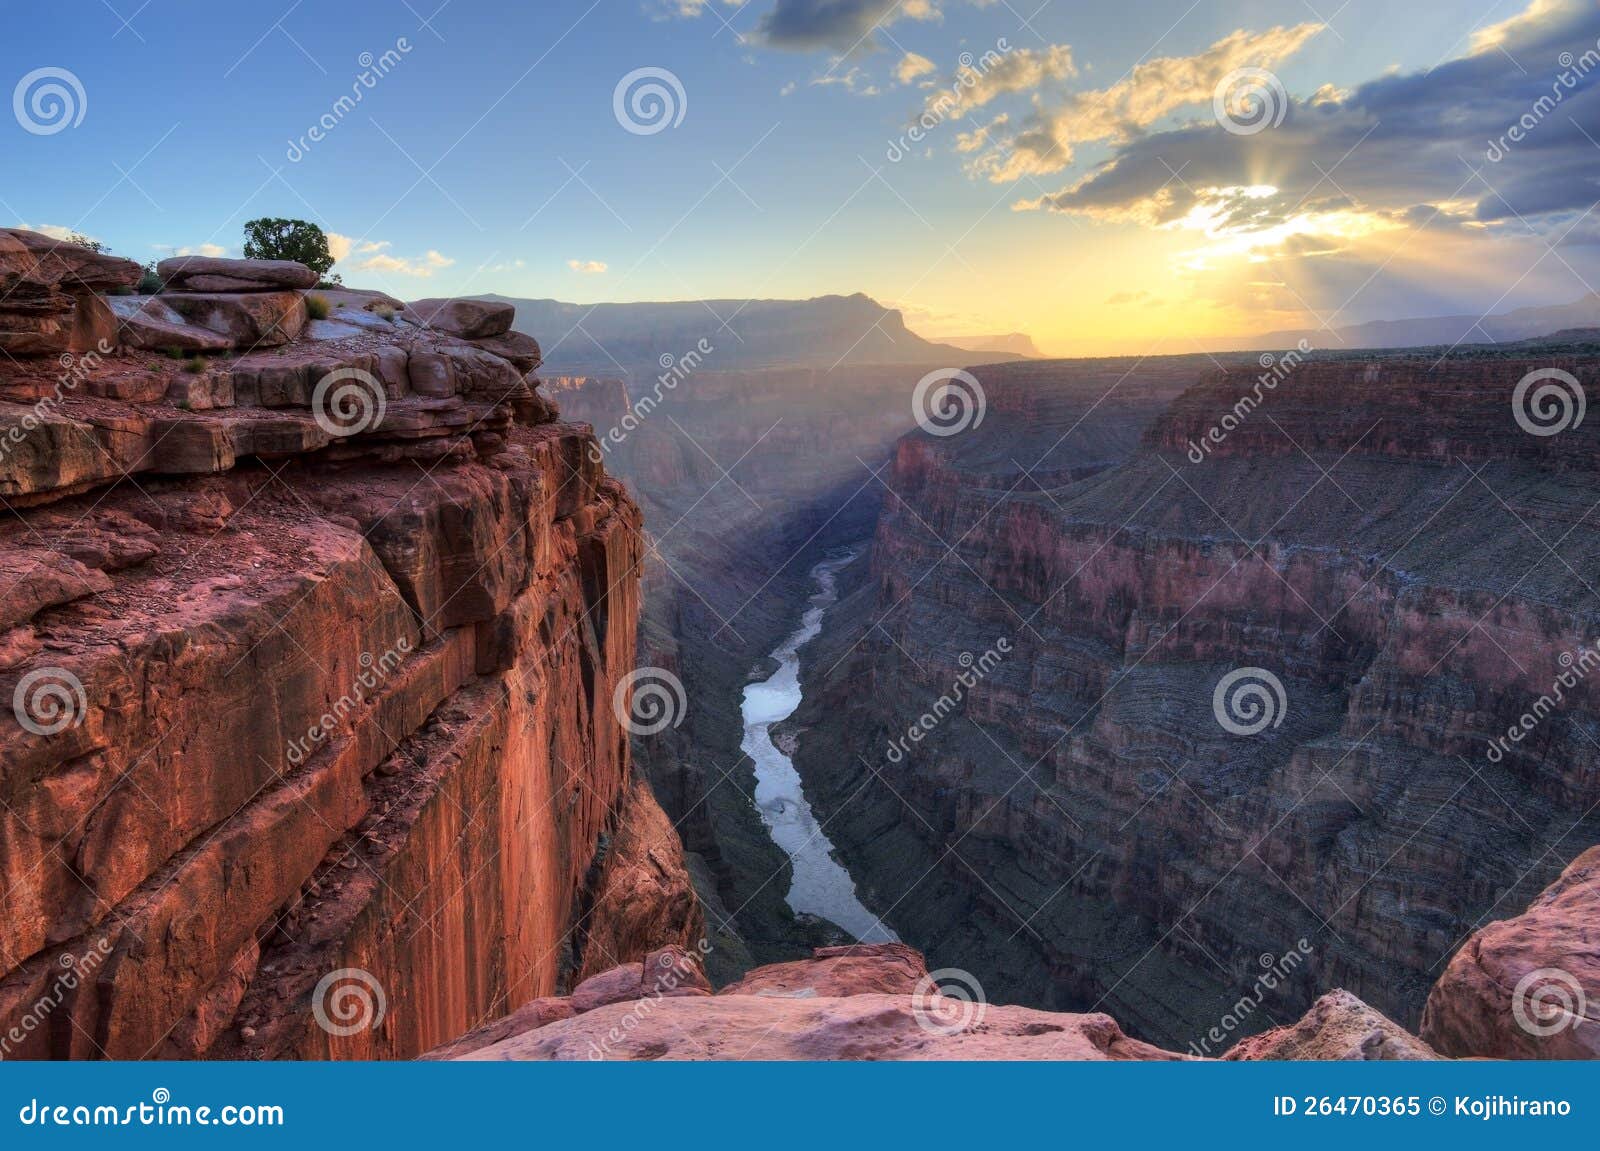 grand canyon toroweap point sunrise